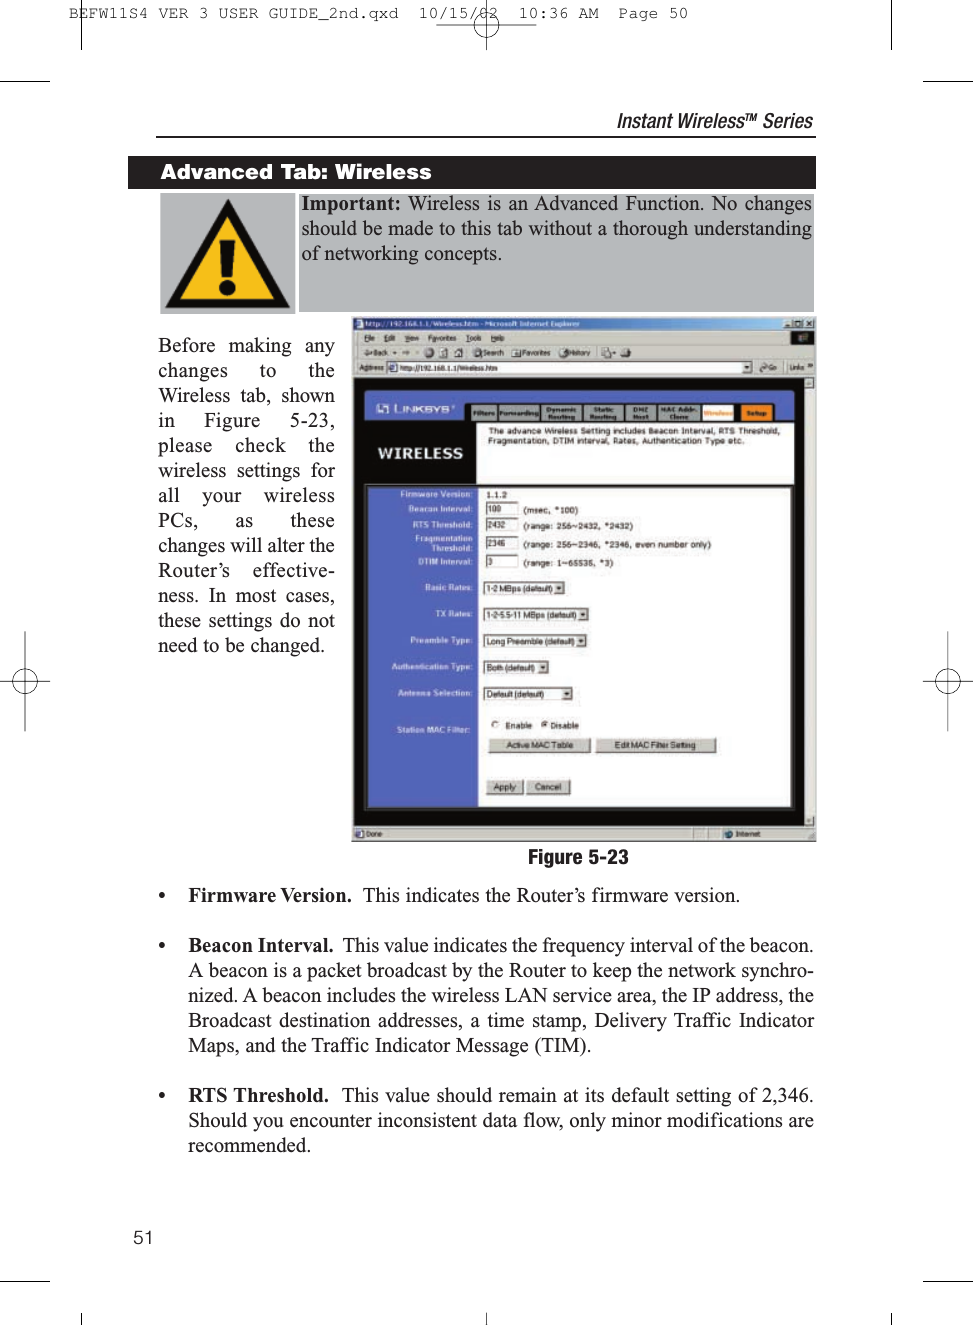 cisco linksys e2500 manual pdf